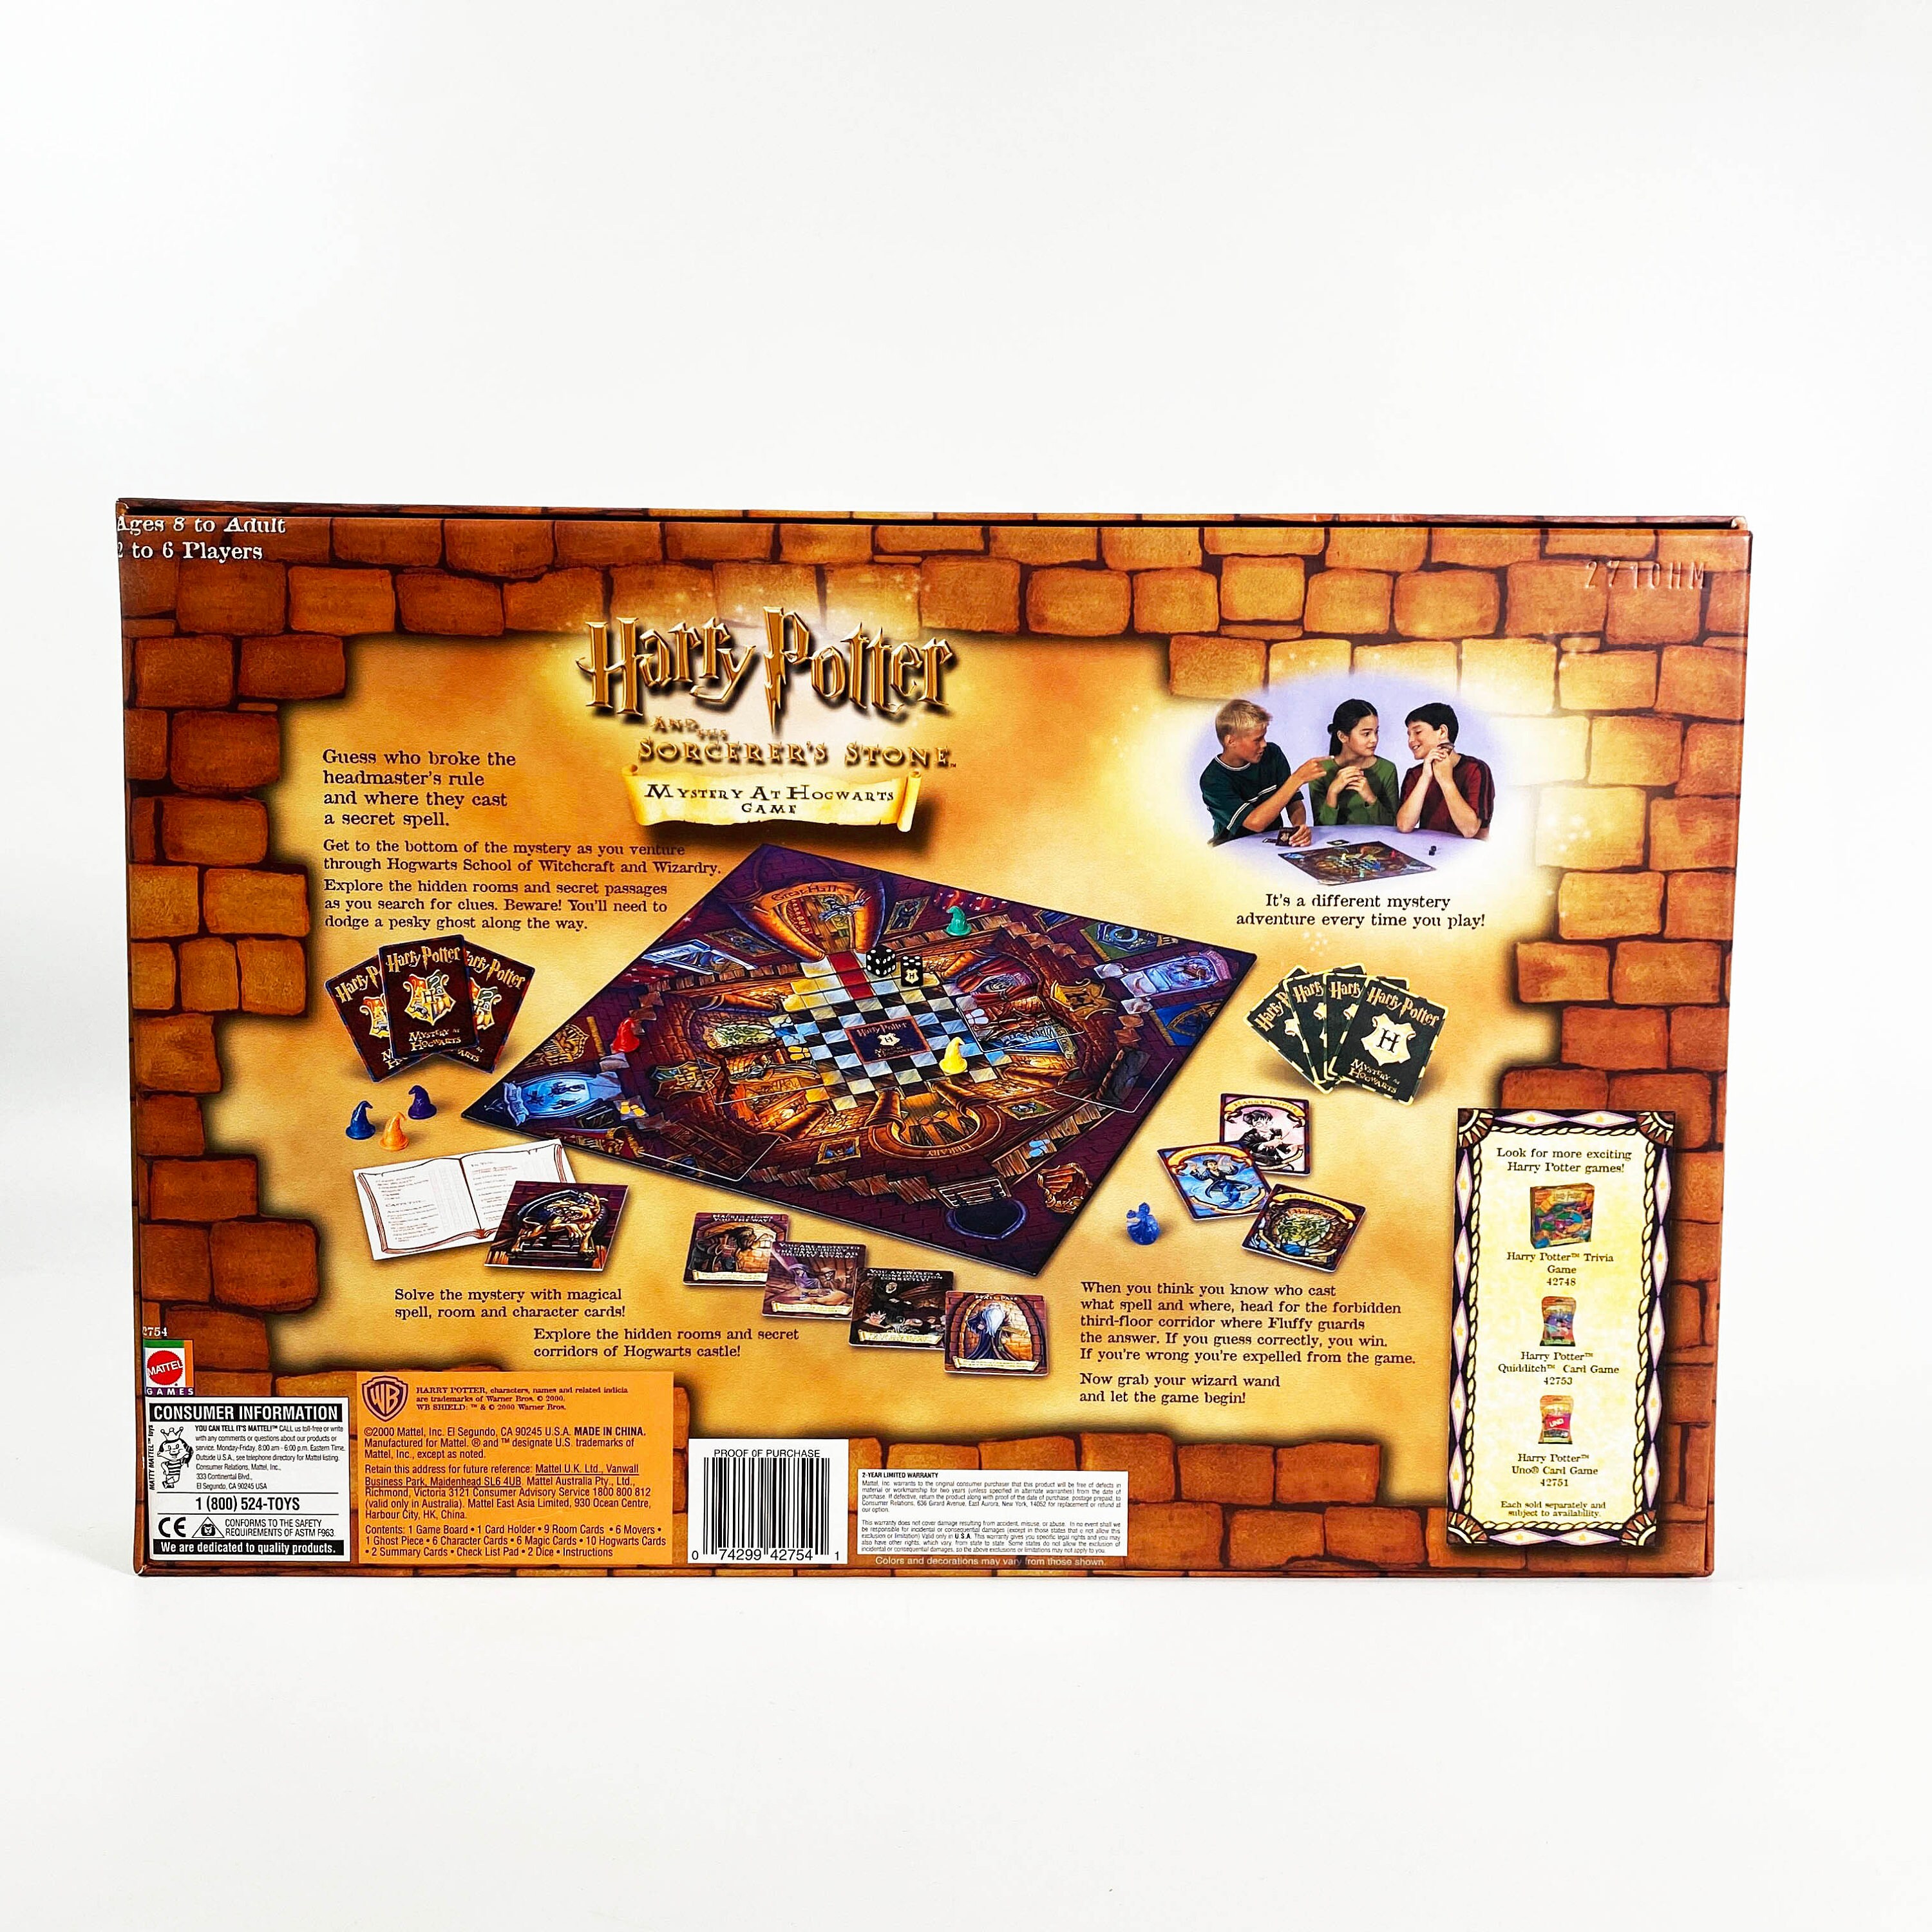 Homemade Harry Potter board game (original) - harry potter post - Imgur